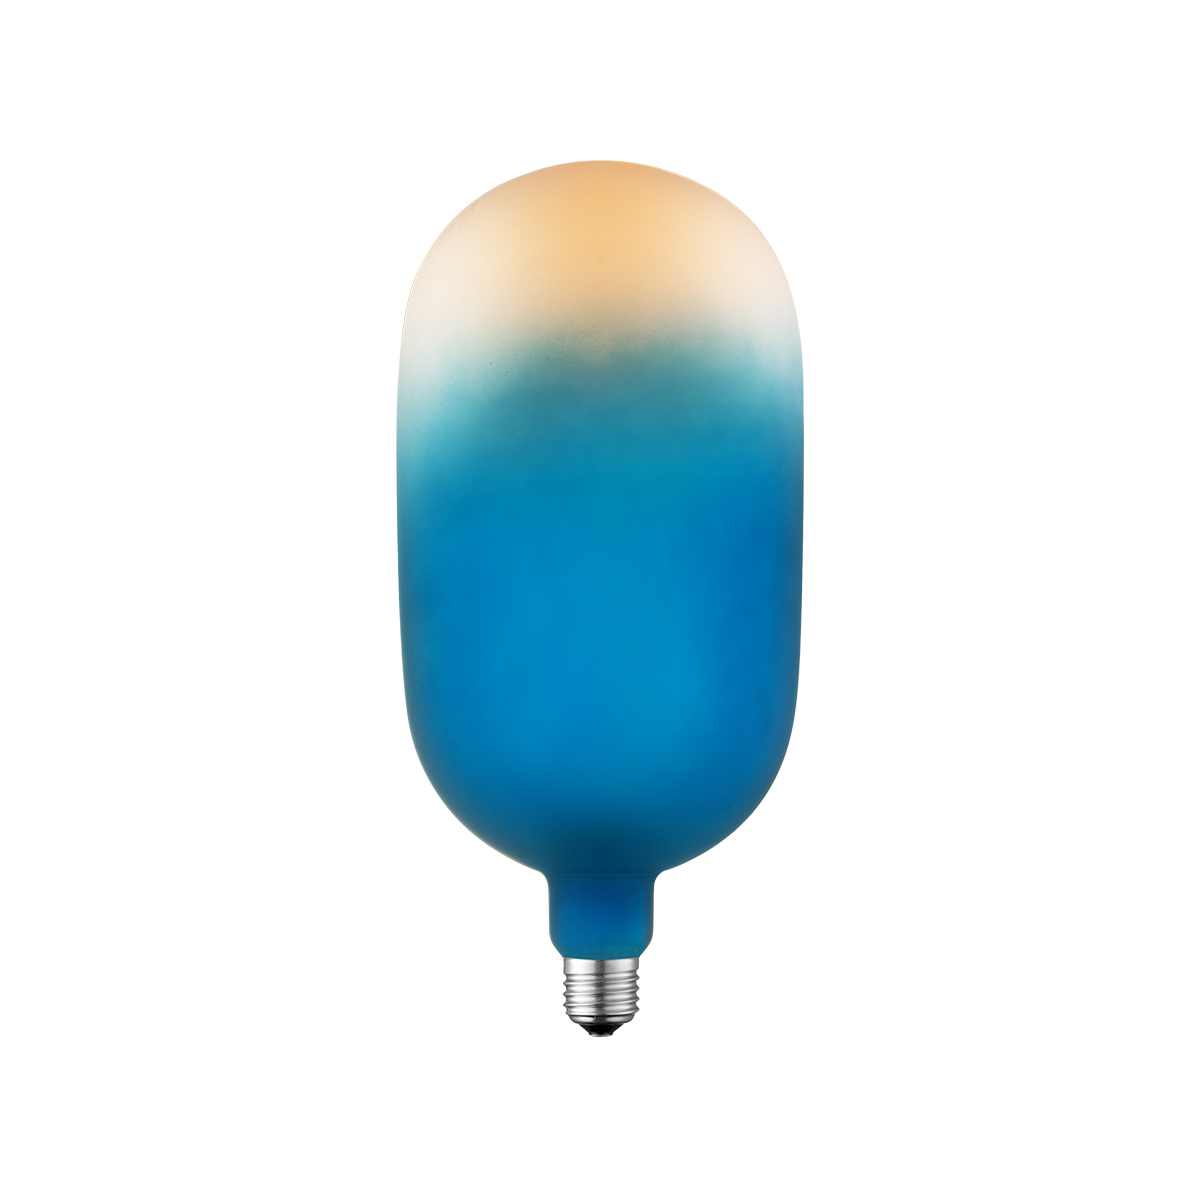 Tangla lighting - TLB-9001-04M - LED Light Bulb Single Spiral filament - 4W gradient blue opal - medium - non dimmable - E27